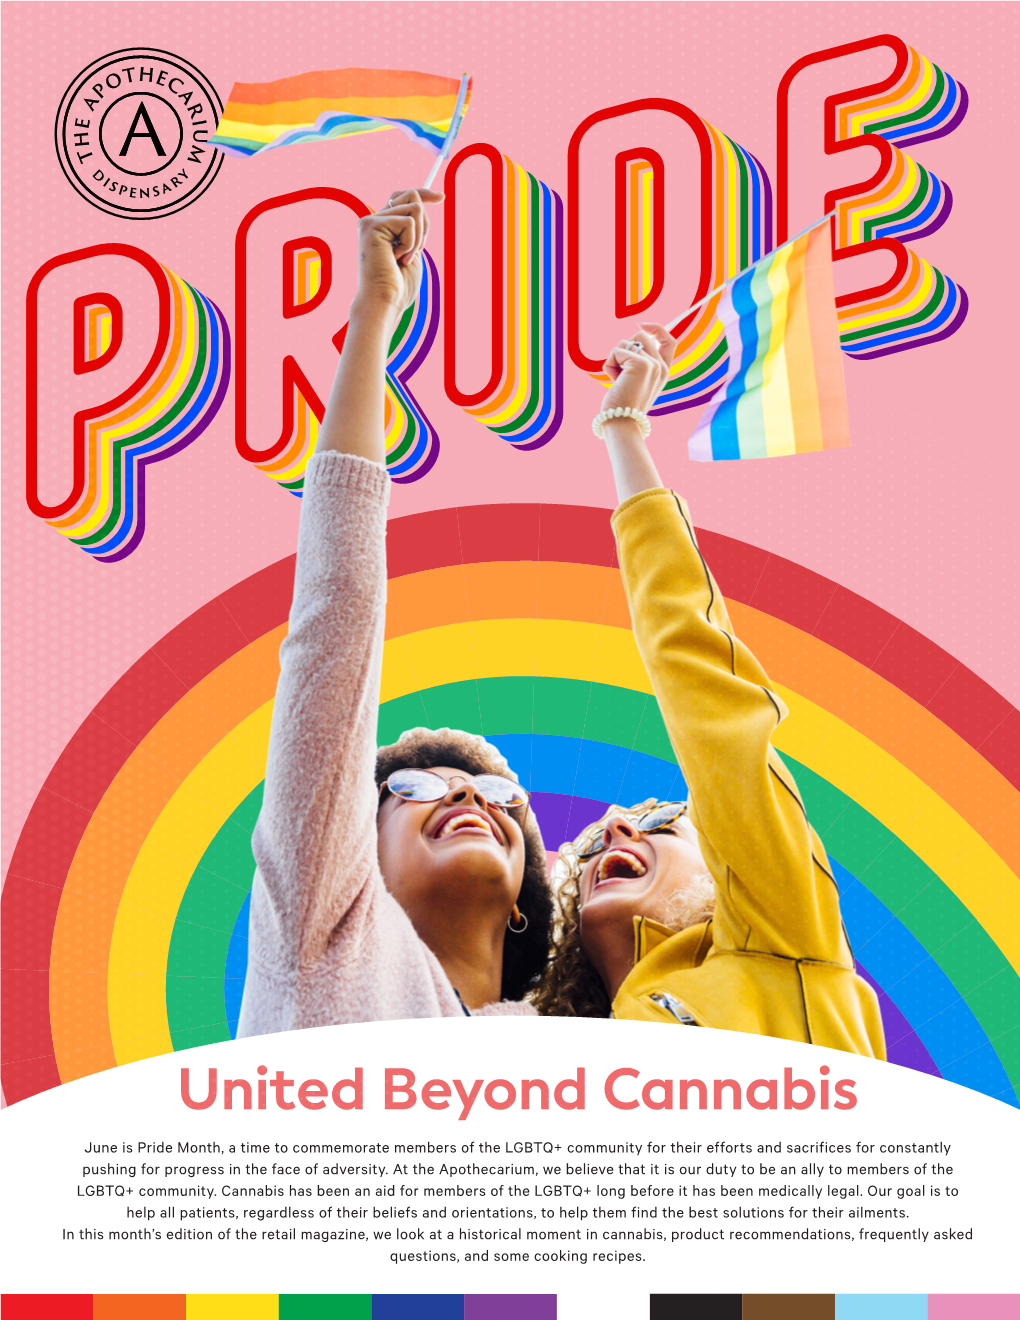 United Beyond Cannabis